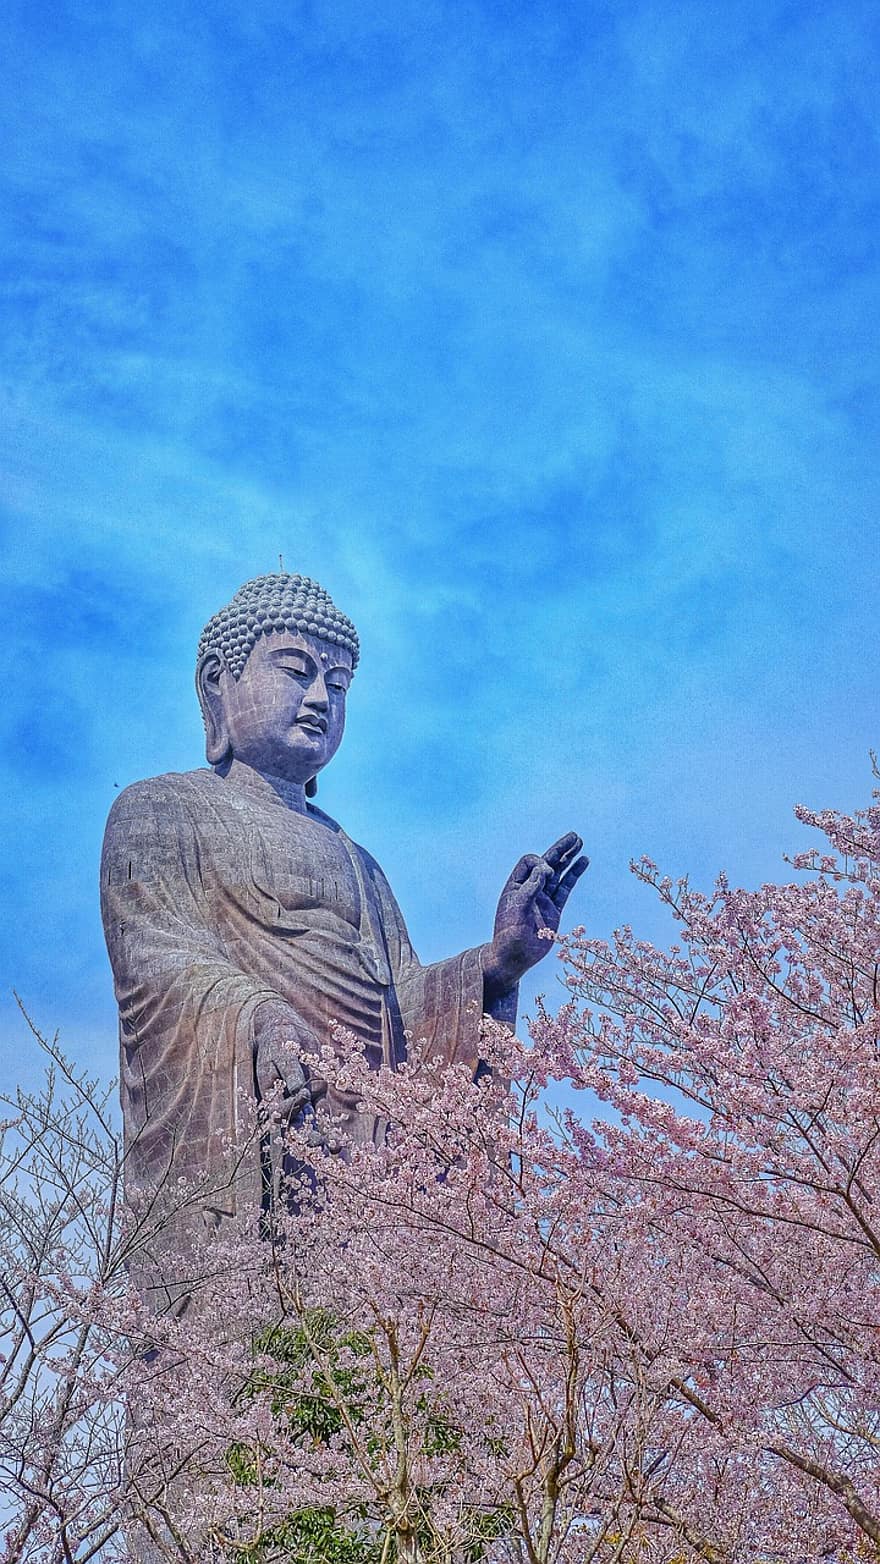 Boeddha, ushiku daibutsu, Japan, ibaraki, standbeeld, beeldhouwwerk, mijlpaal, toeristische attractie, monument, Boeddhisme, religie